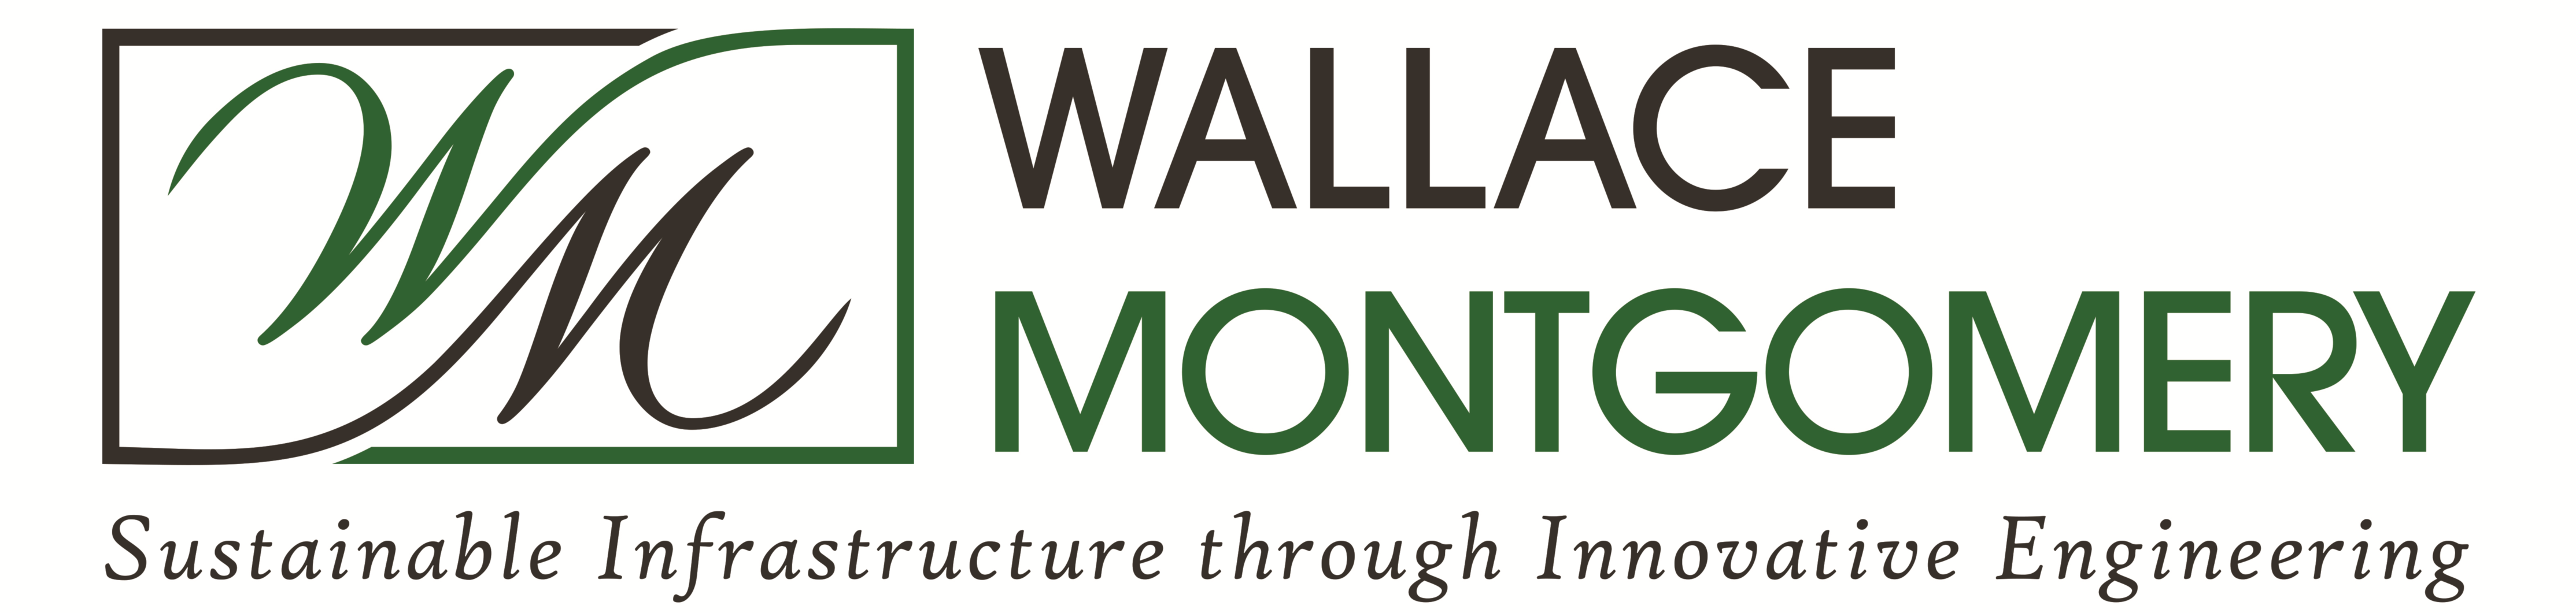 Wallace Montgomery & Associates, LLP logo